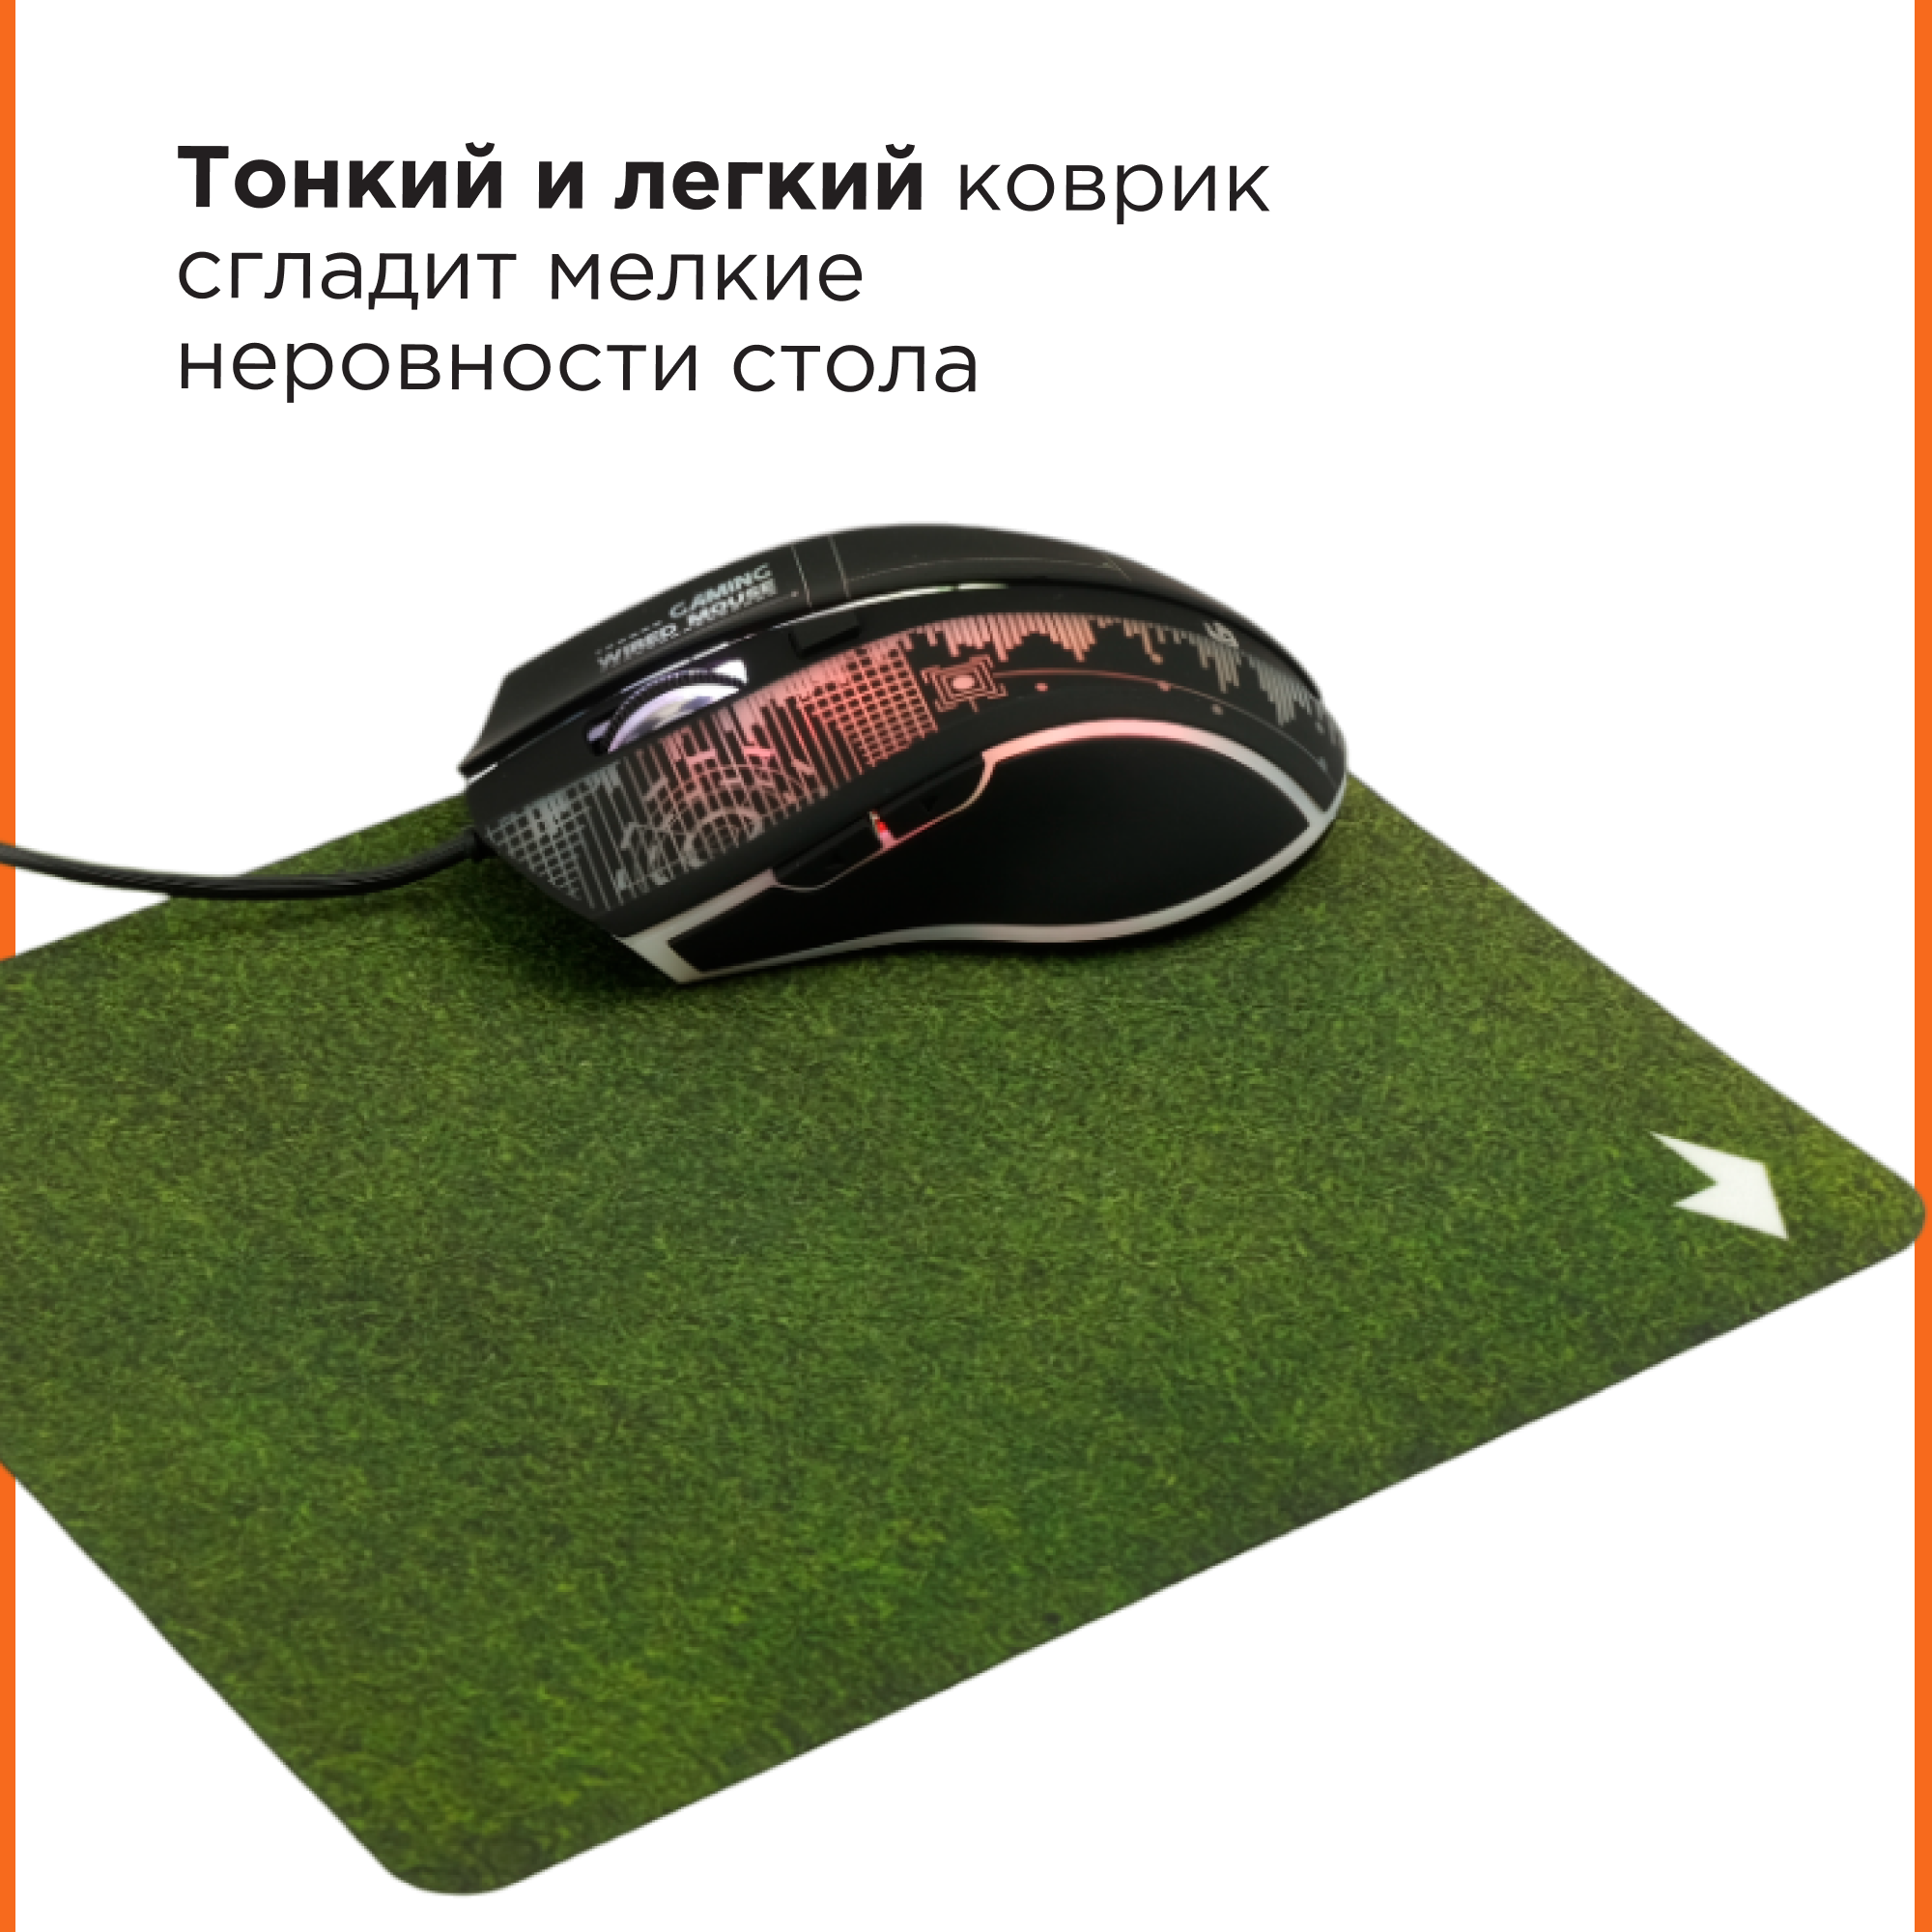 Коврик для мыши Gembird MP-GRASS, рисунок "трава", размеры 220*180*1мм, полиэстер+резина - фото №4